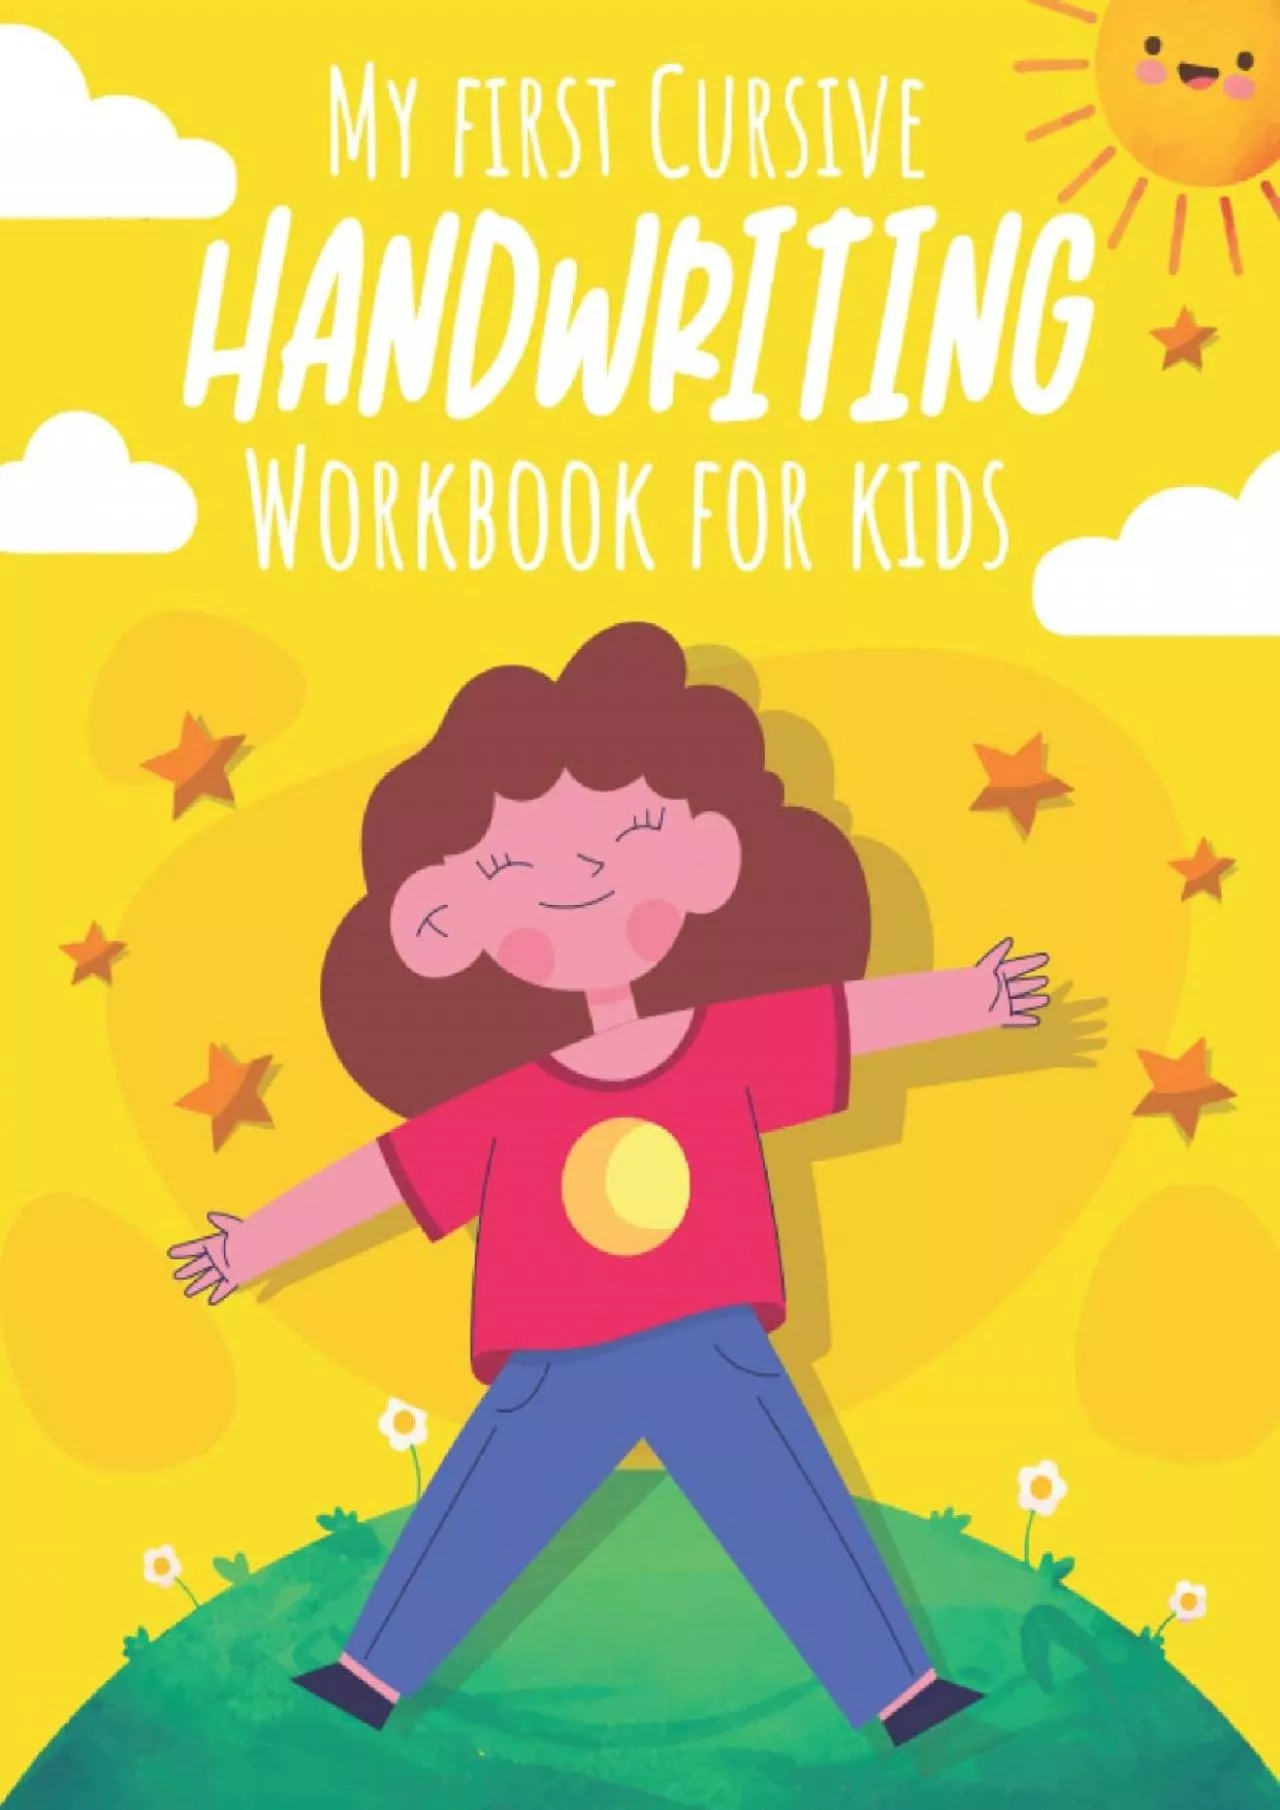 [DOWNLOAD] My First Cursive Handwriting Workbook for Kids: Simple and Original cursive